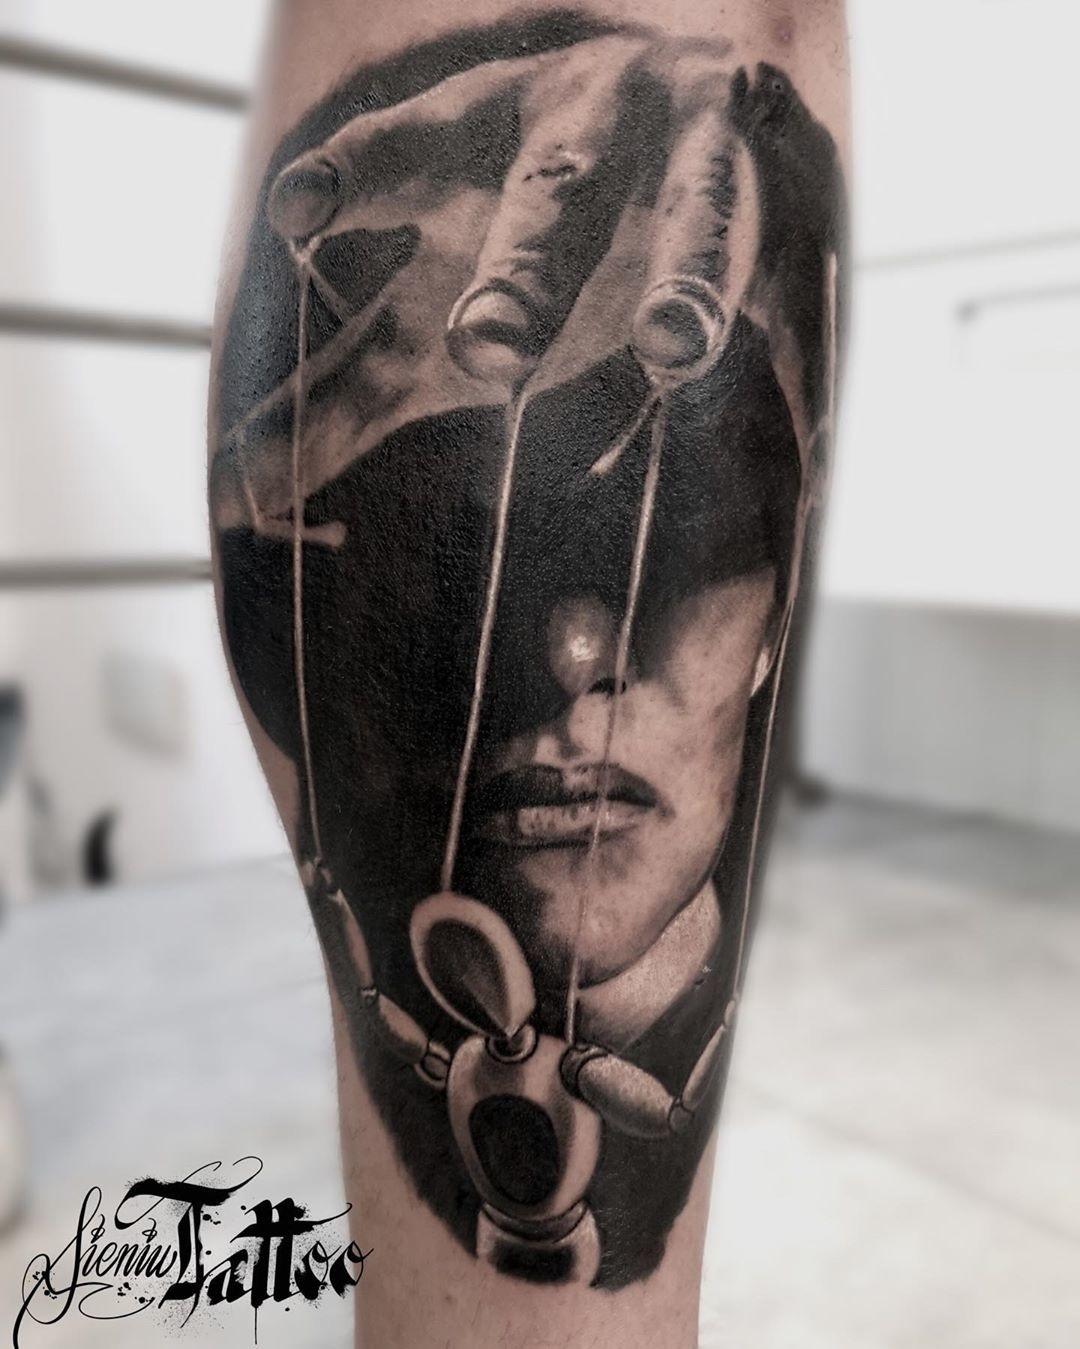 Inksearch tattoo Mateusz "SIENIU" Sienkiewicz